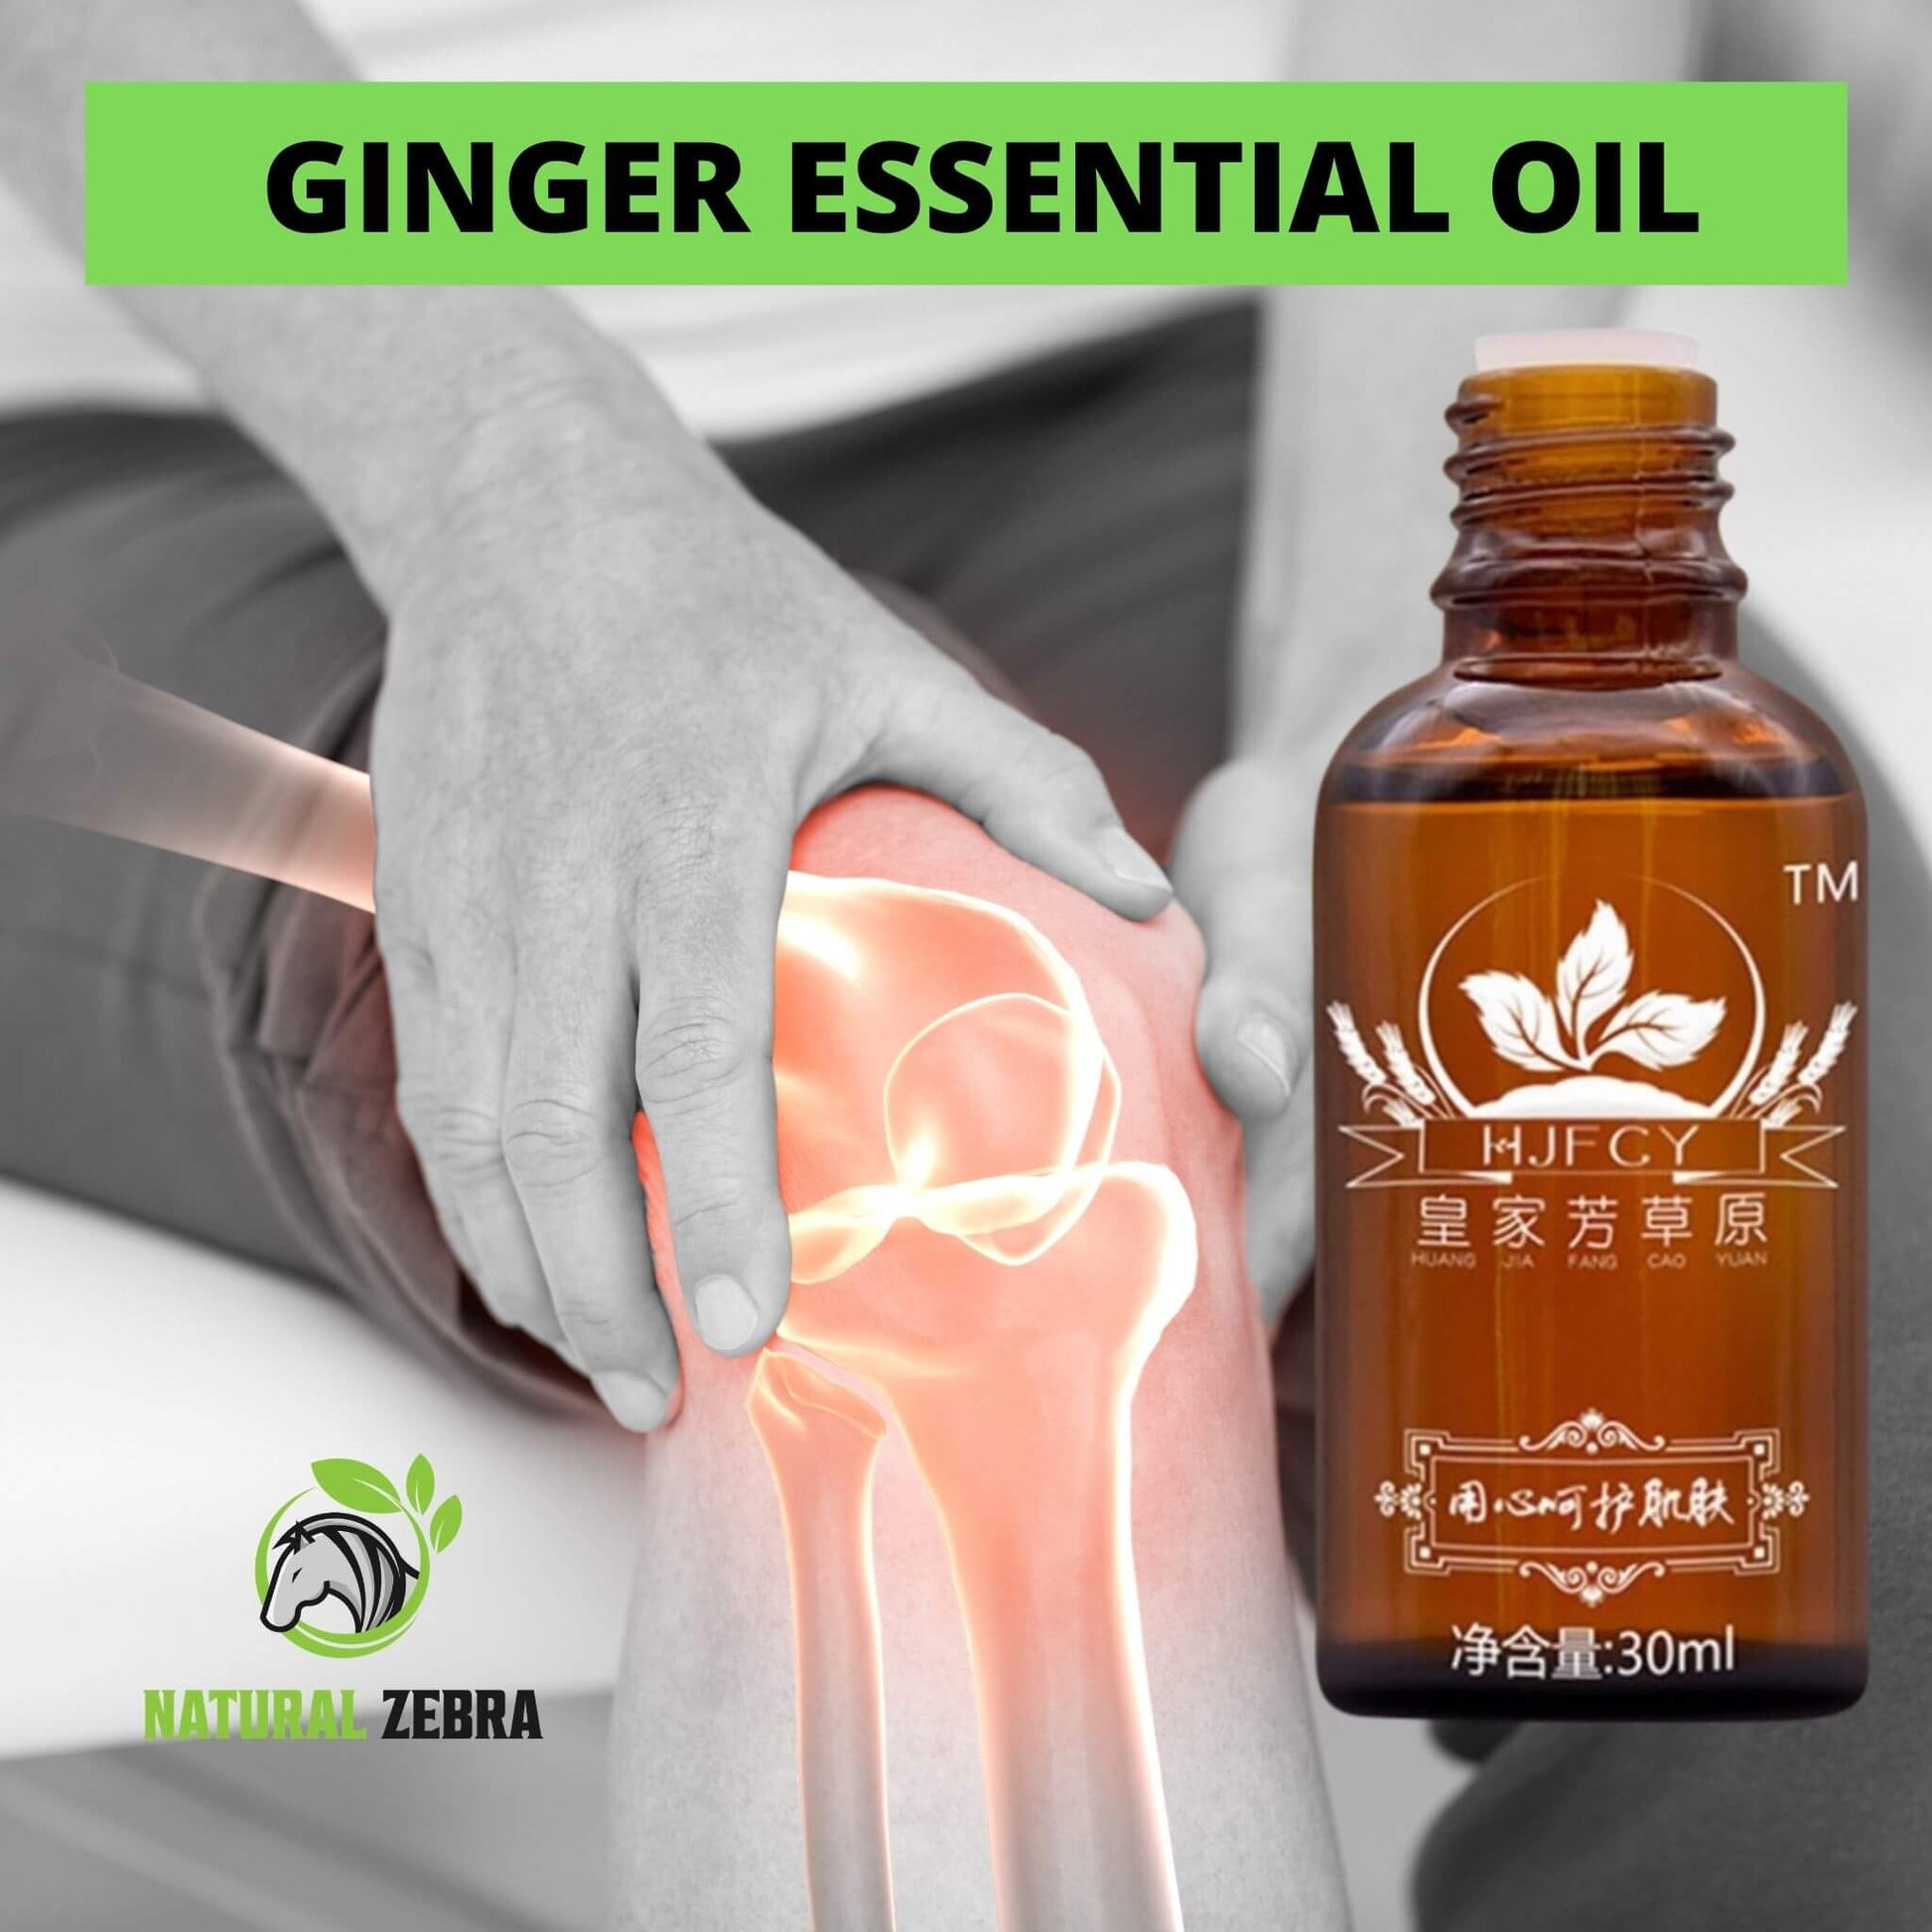 Ginger Essential Oil - 30ml - 32 - NATURAL ZEBRA